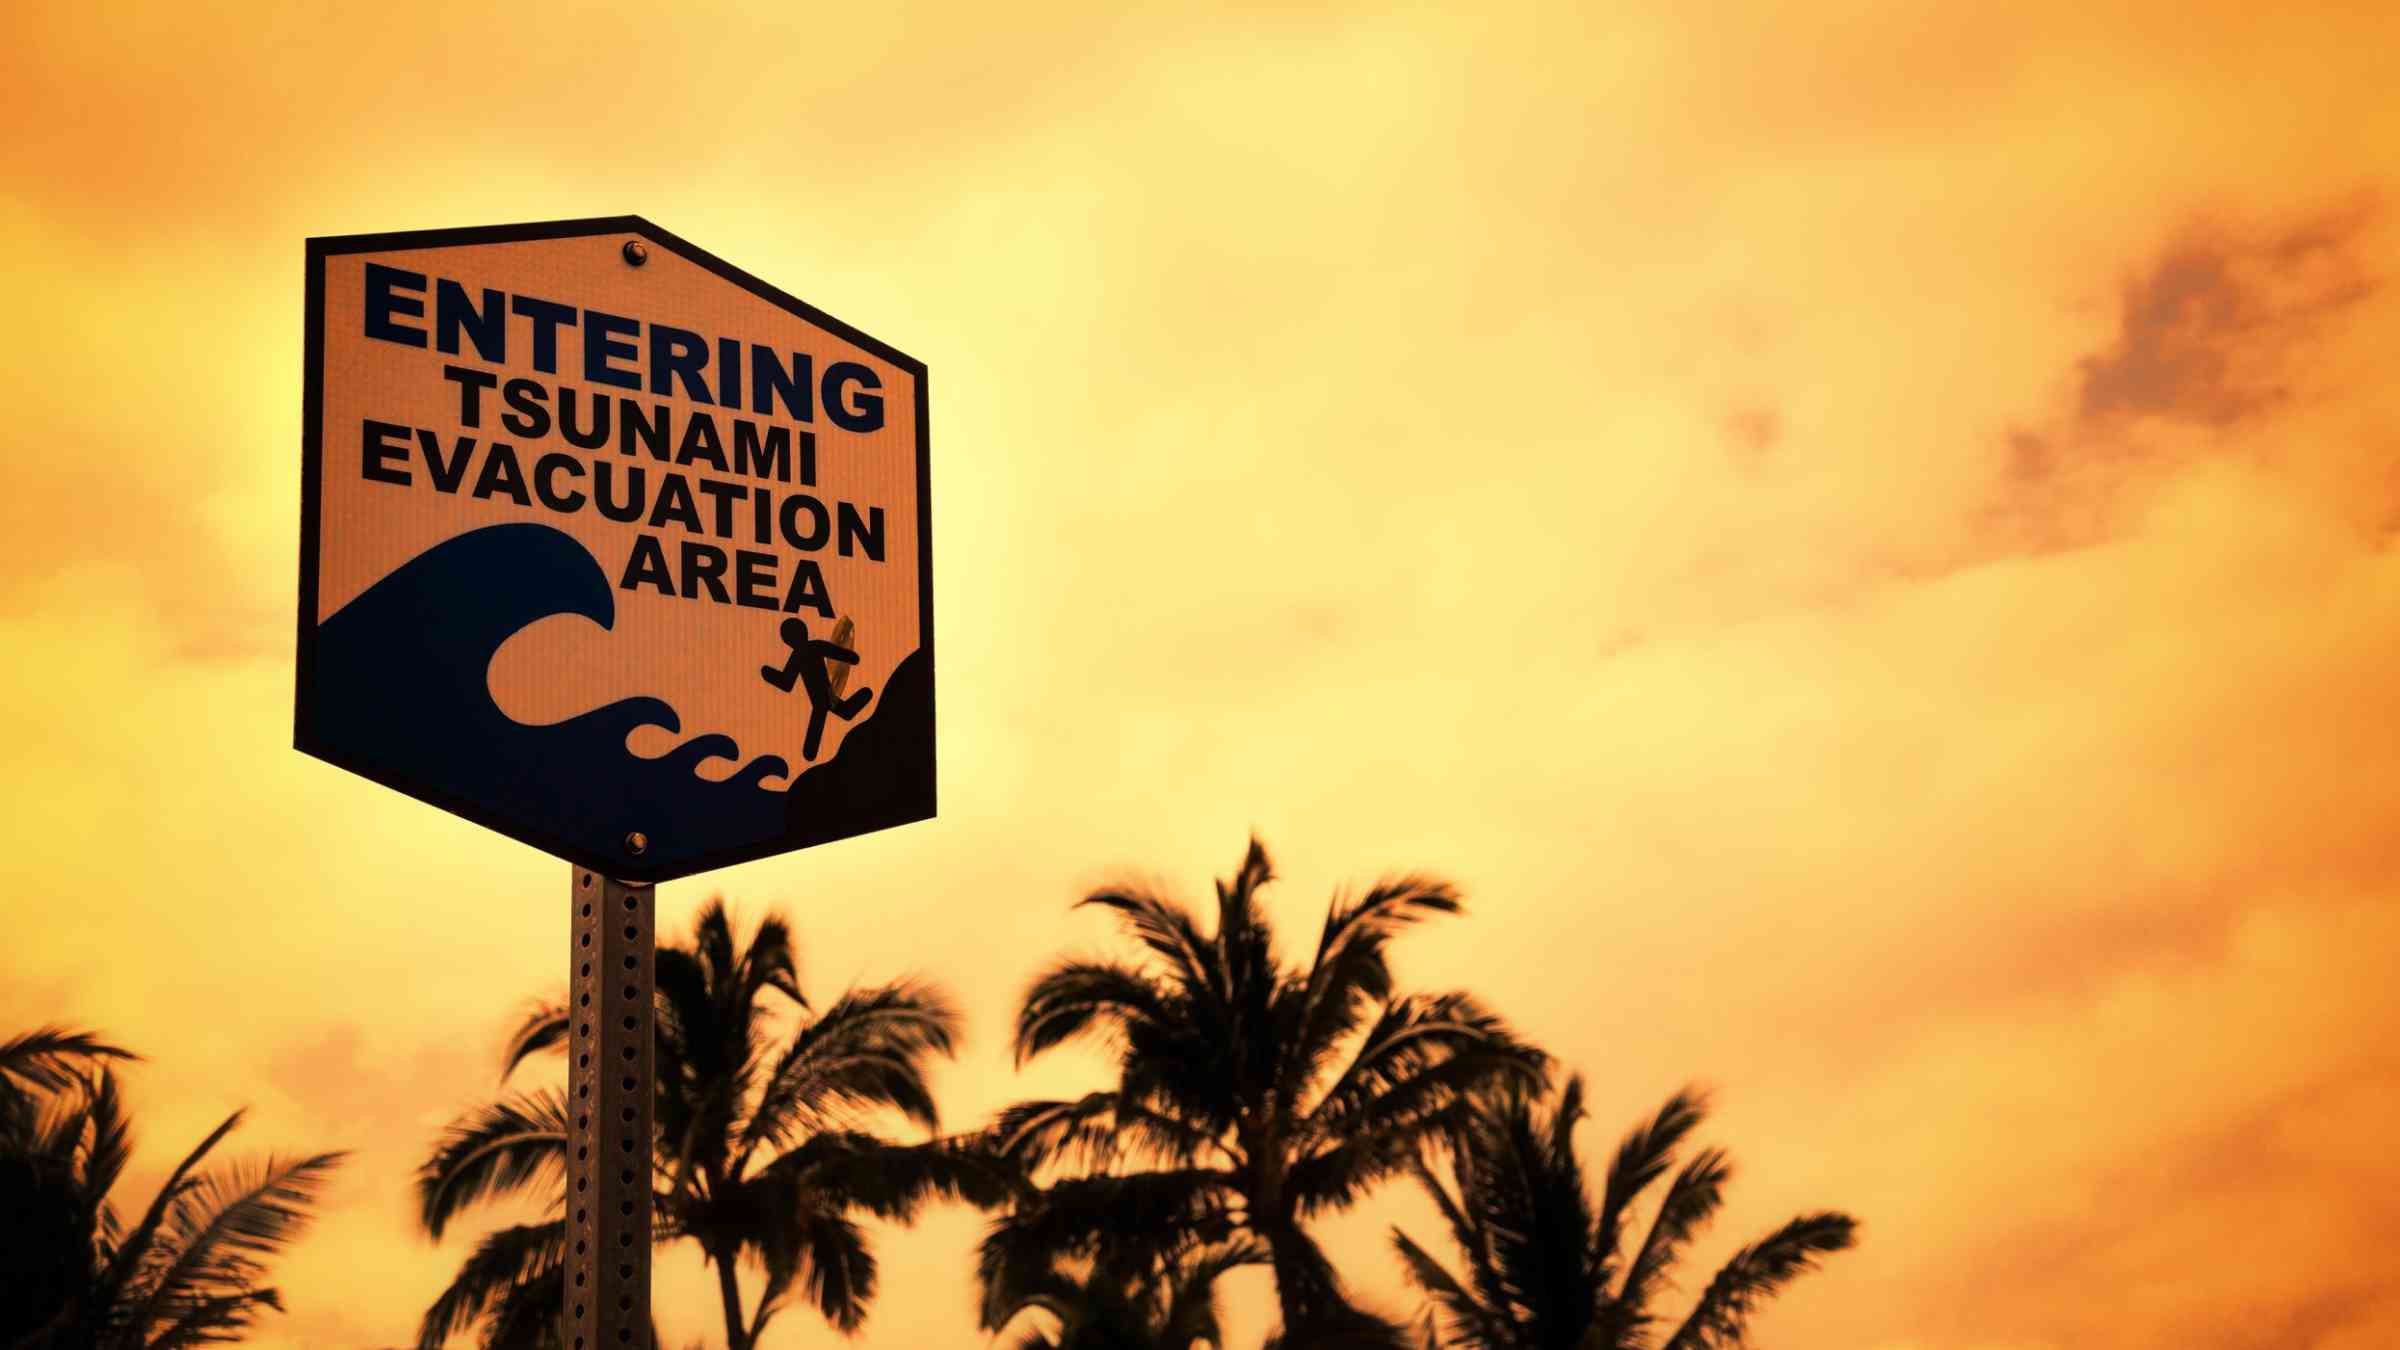 Tsunami warning sign